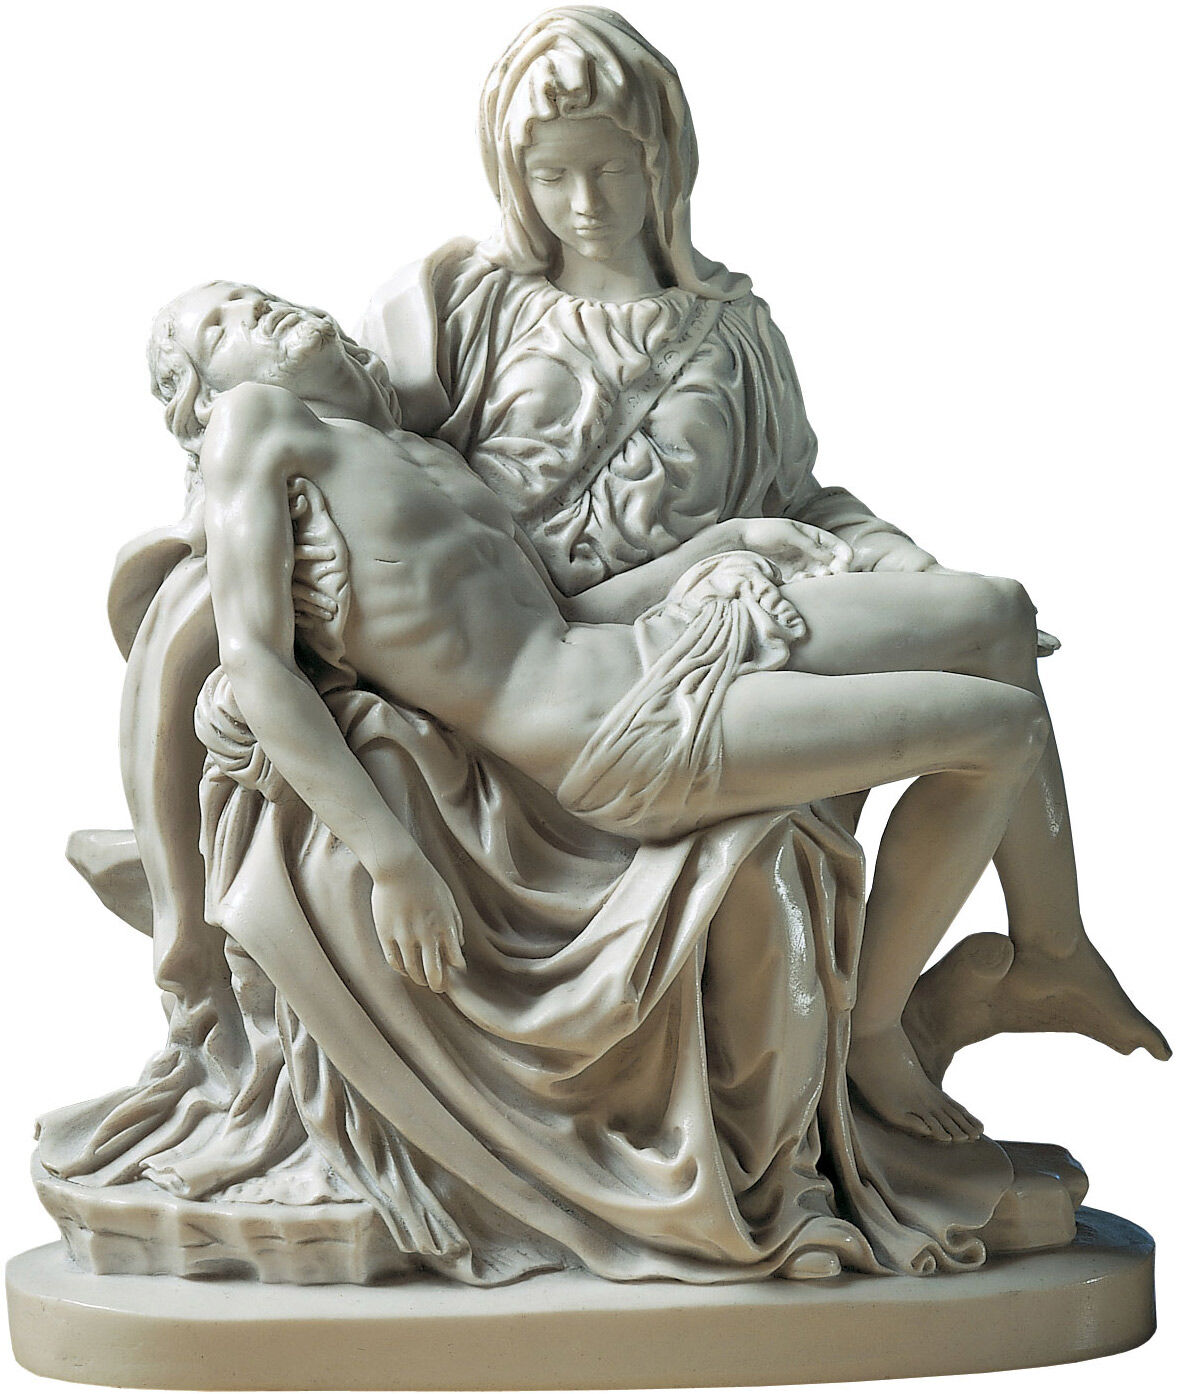 Skulptur "Pietà" (1489-99), Reduktion in Kunstmarmor von Michelangelo Buonarroti